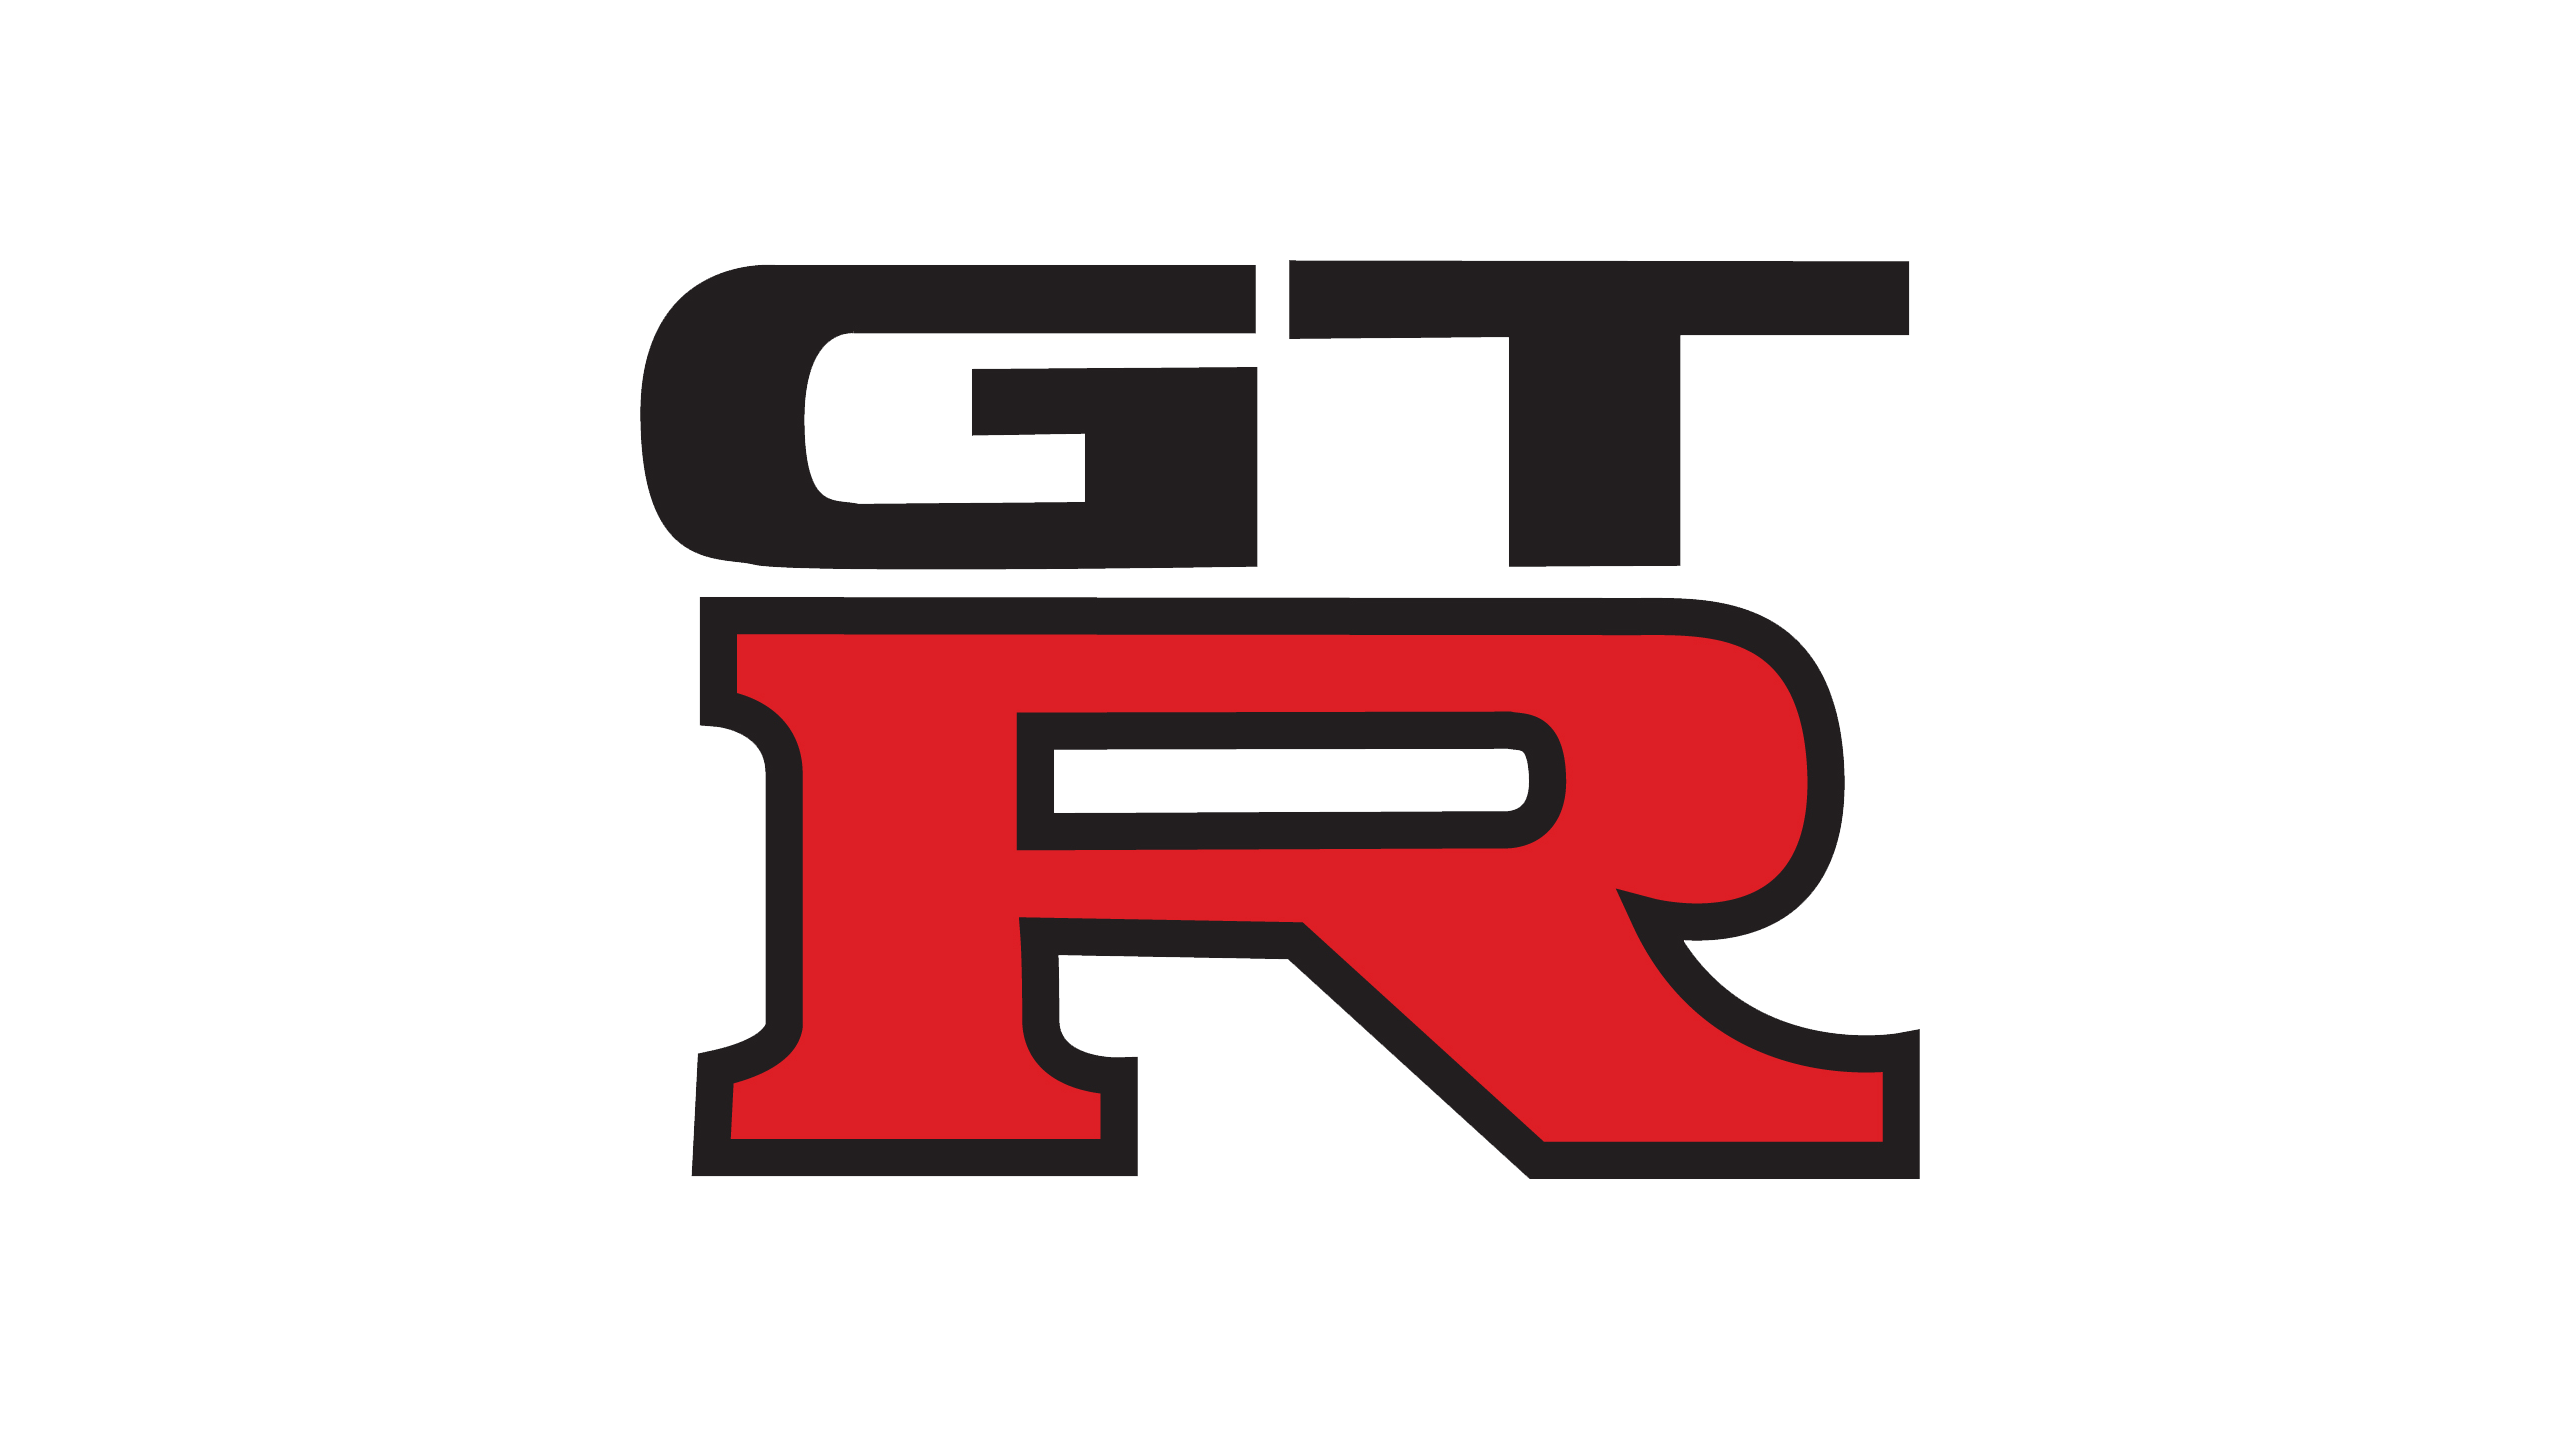 Cool GTR Logo - Nissan GT-R logo, HD Png, Information | Carlogos.org